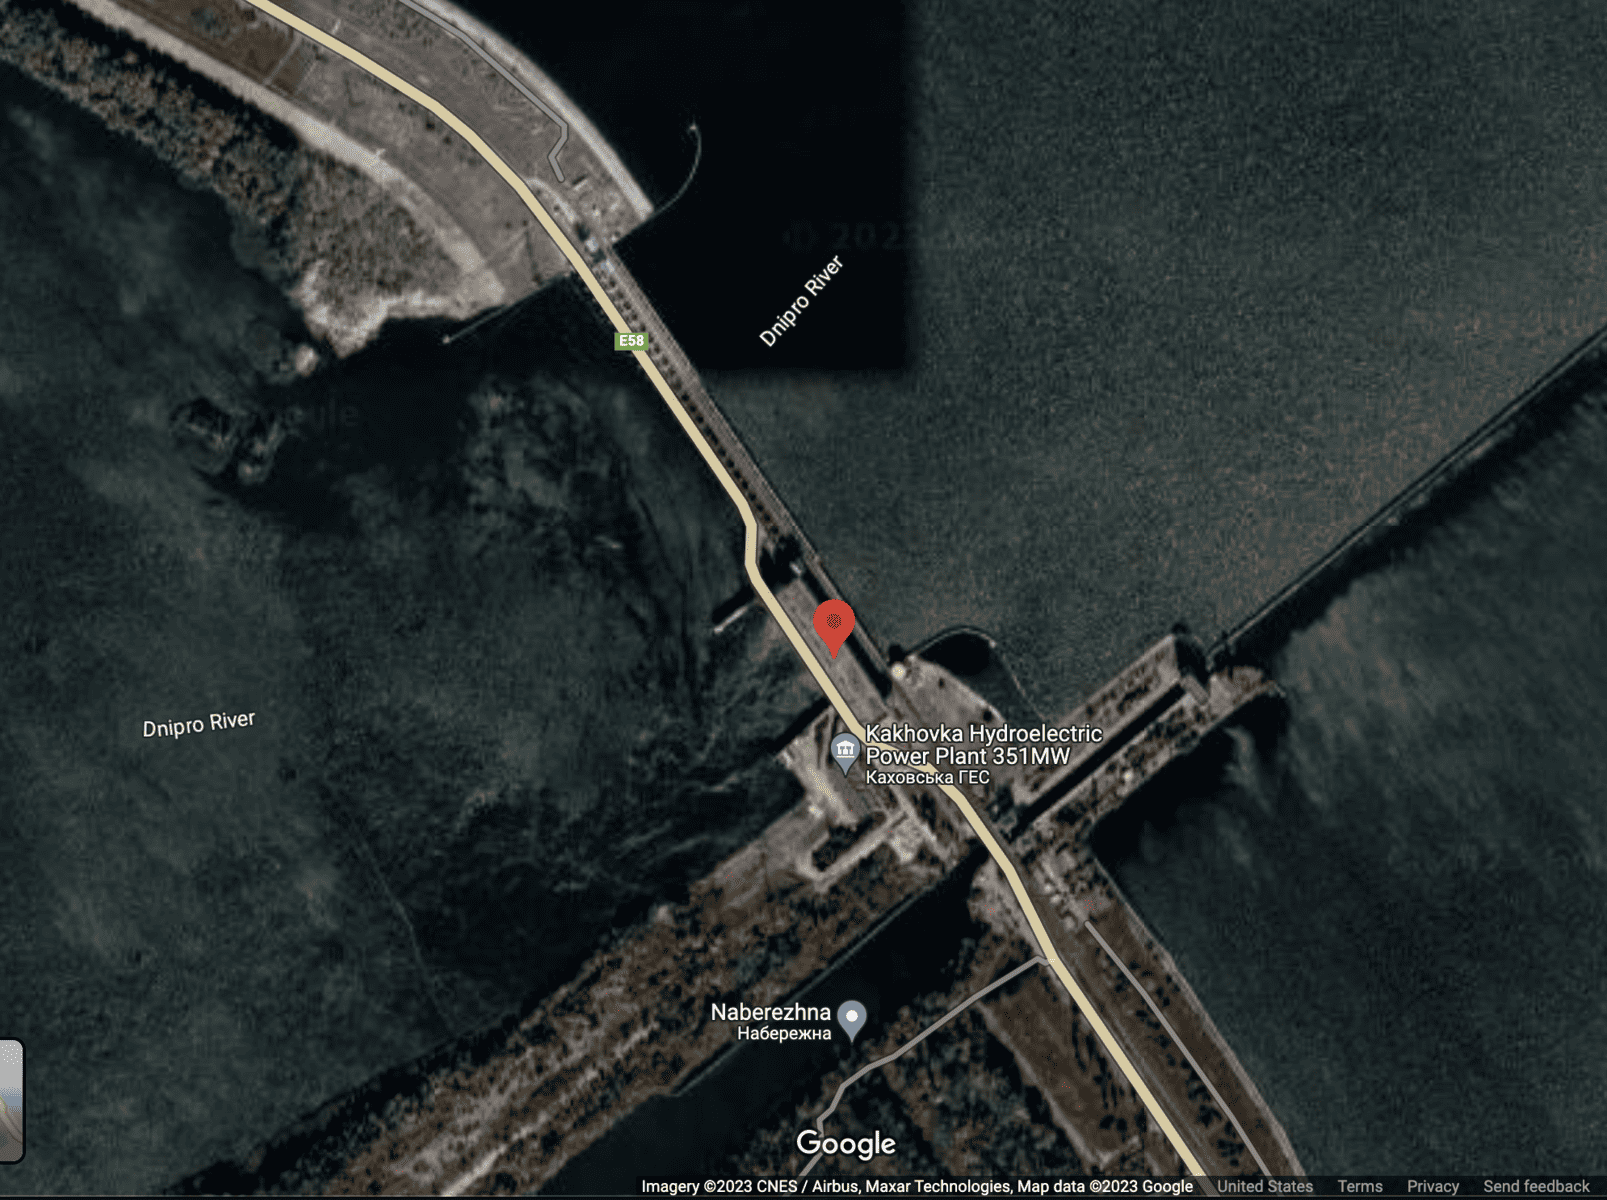 Kakhovka Hydroelectric Power Plant - Google Maps